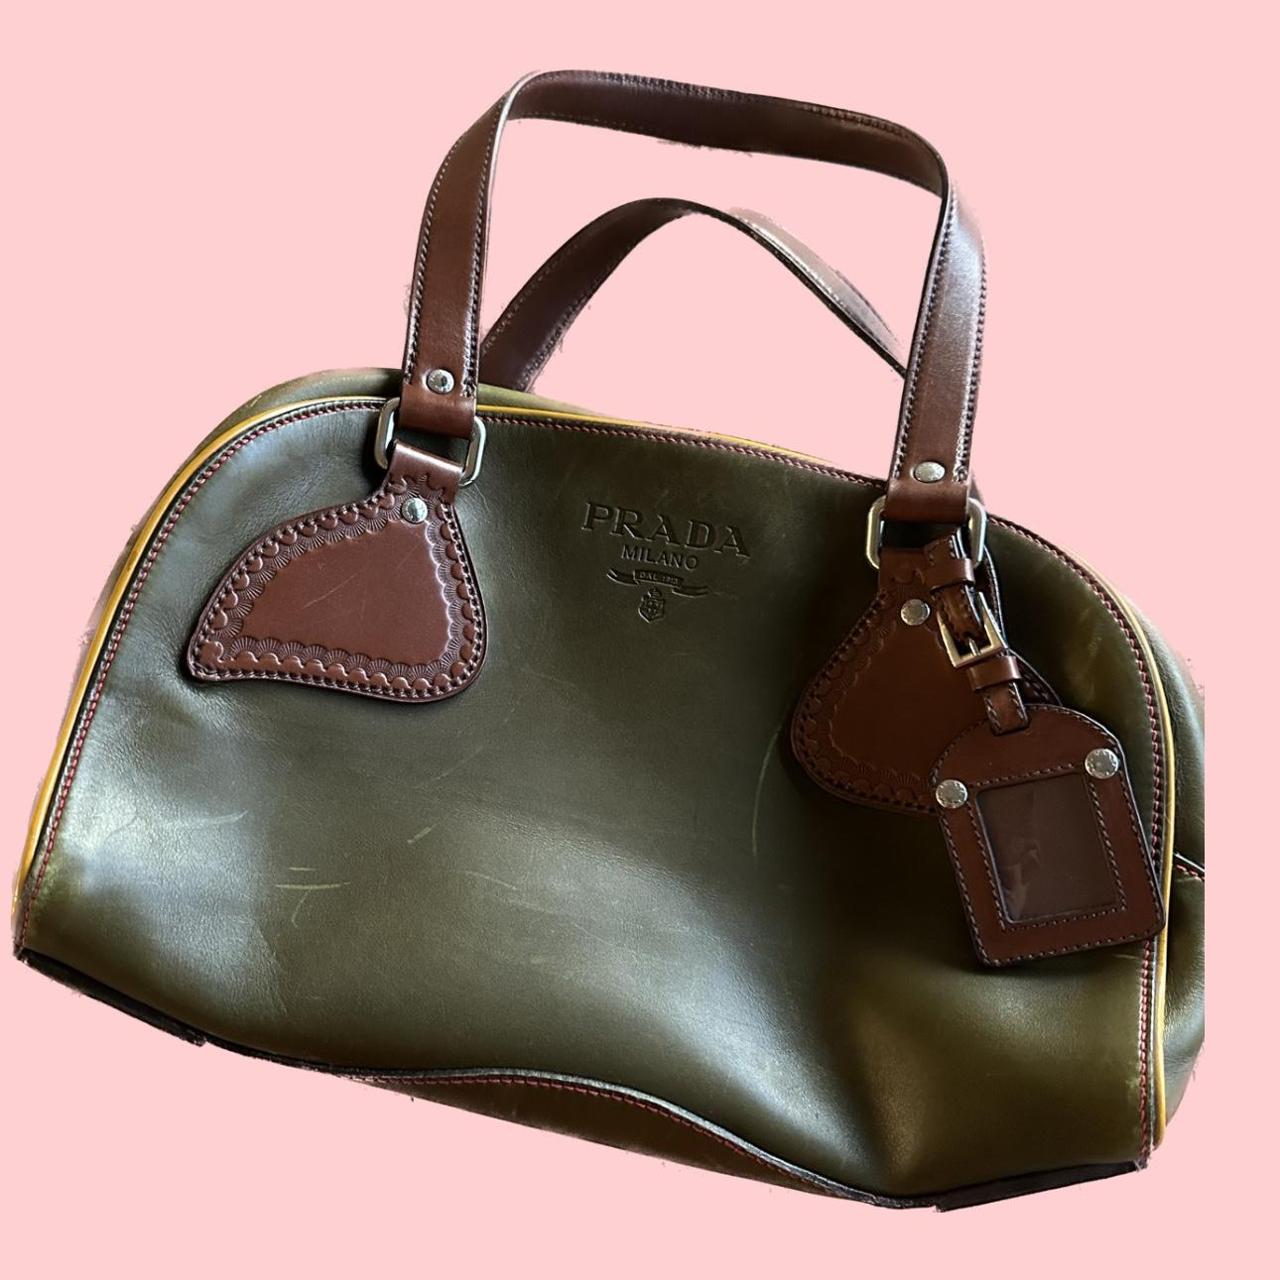 Prada Saffiano Leather Shoulder Bag - Farfetch